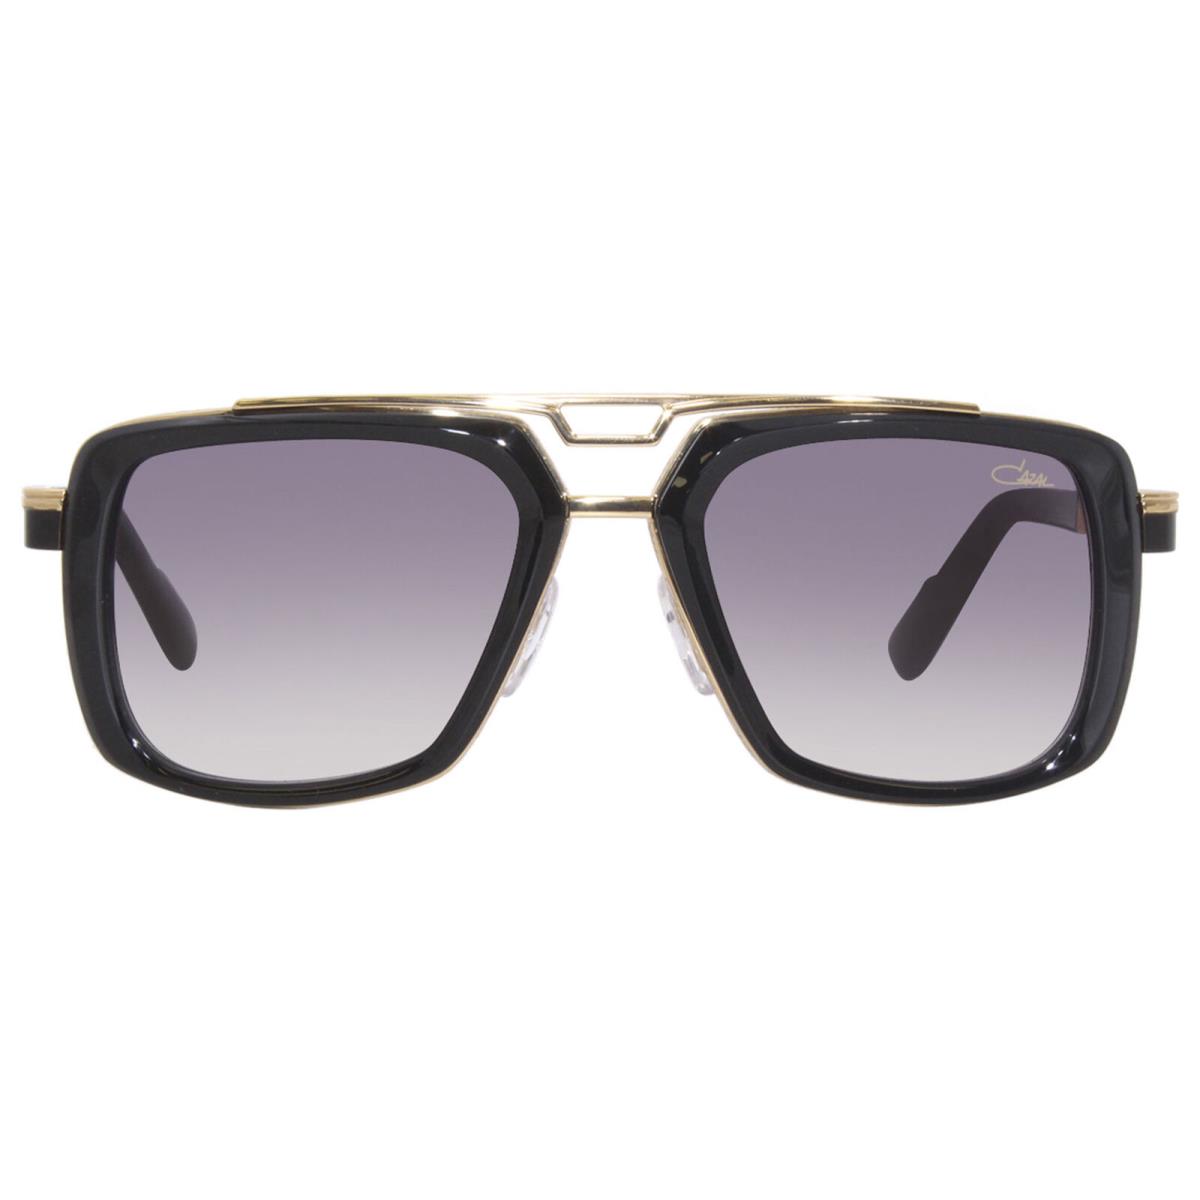 Cazal 9104 001 Sunglasses Men`s Black/gold/grey Gradient Lens Square Shape 54mm